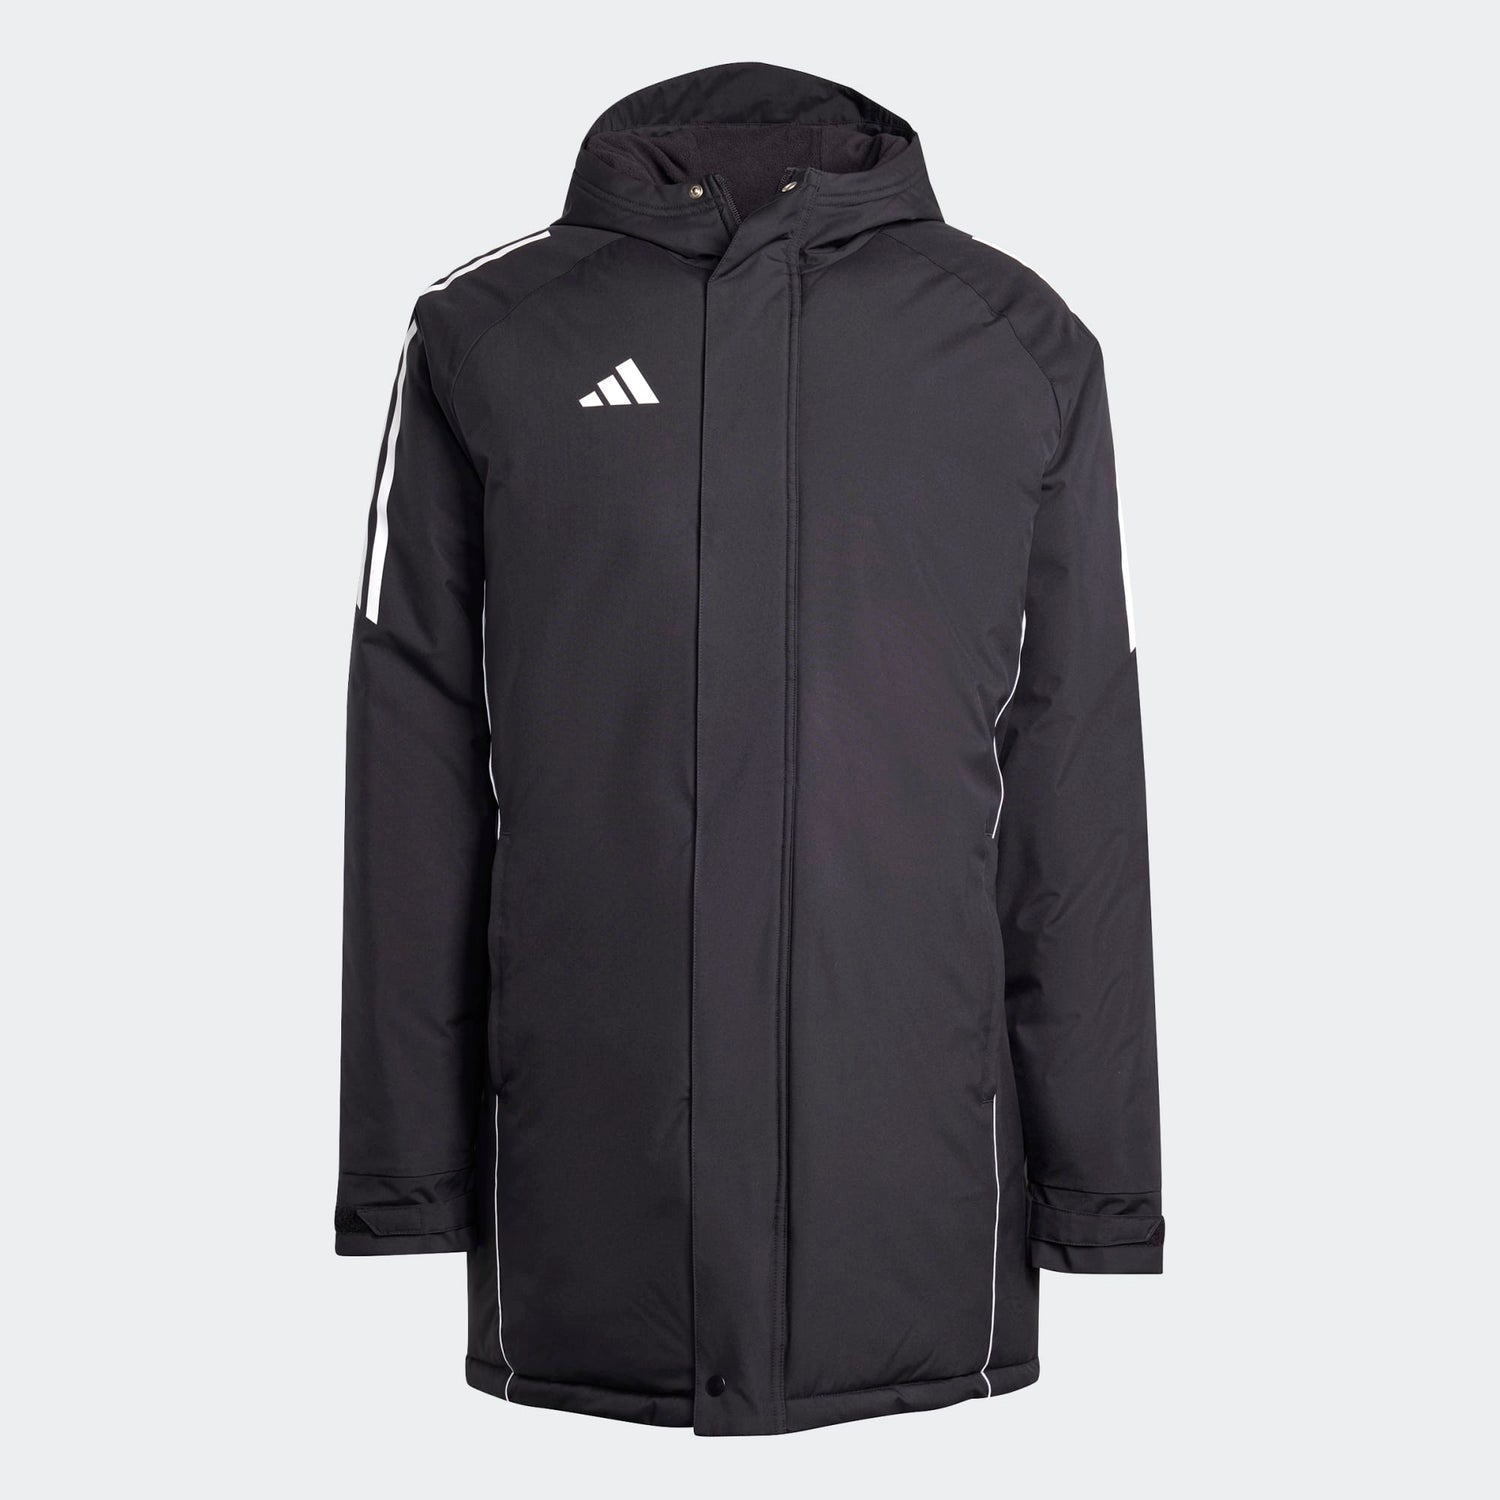 Adidas Soccer Jackets | High-Quality Team Apparel